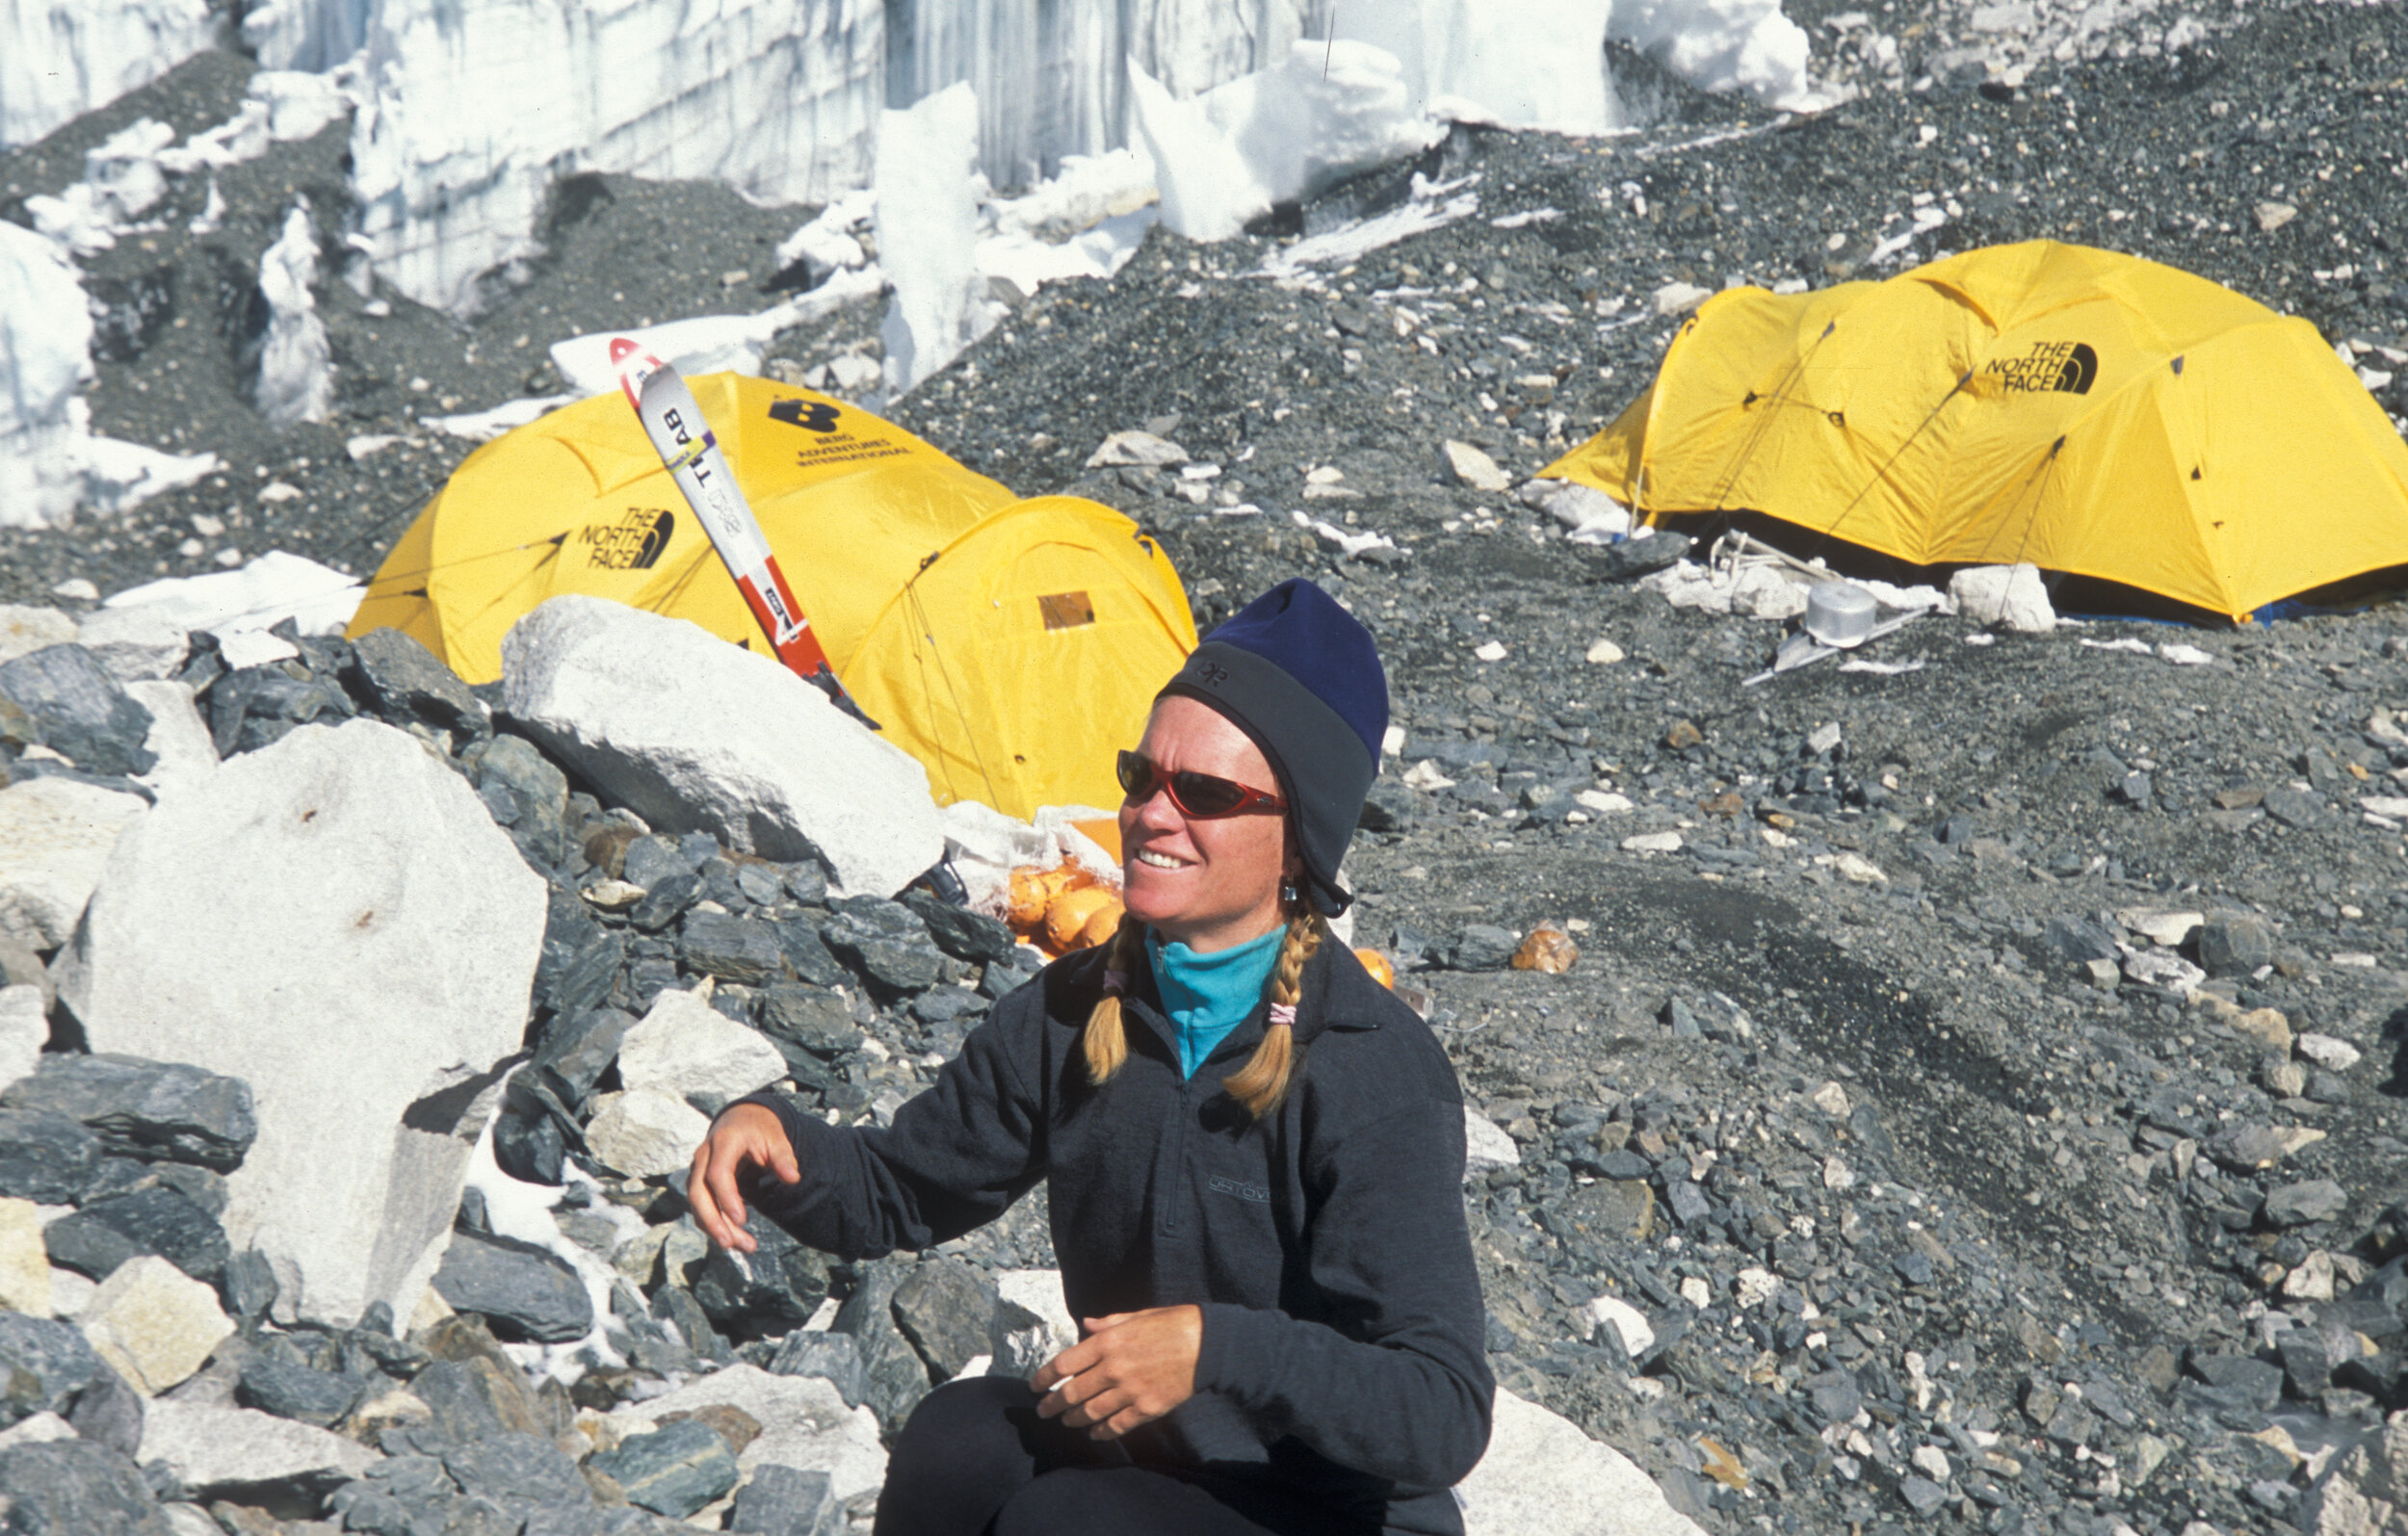  Maegan at Camp II on Everest, October 2003. Photo Wally Berg 